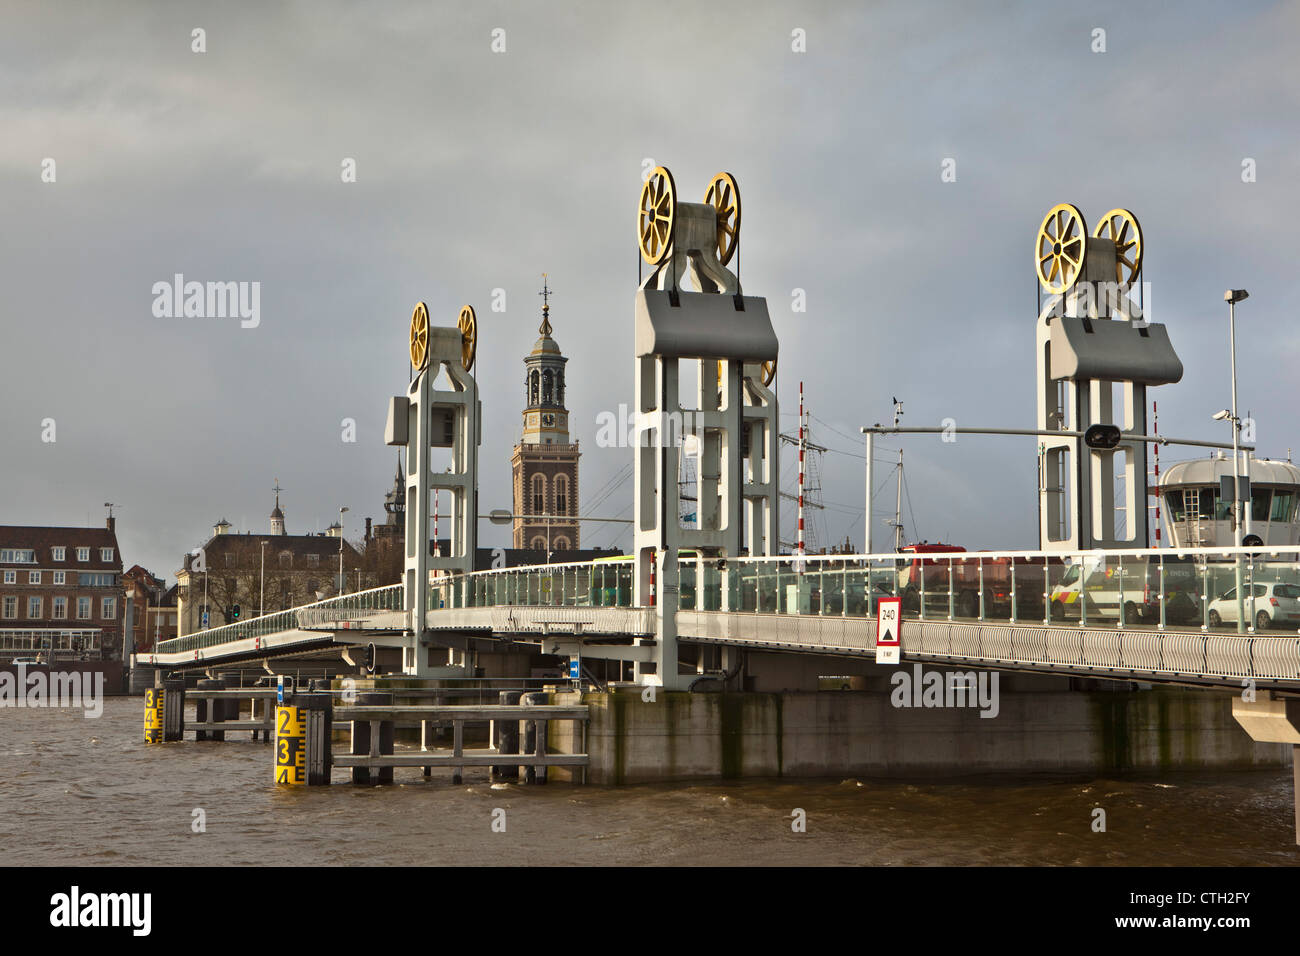 I Paesi Bassi, Kampen, Skyline. Ponte sul Fiume Ijssel. L'acqua alta. Foto Stock